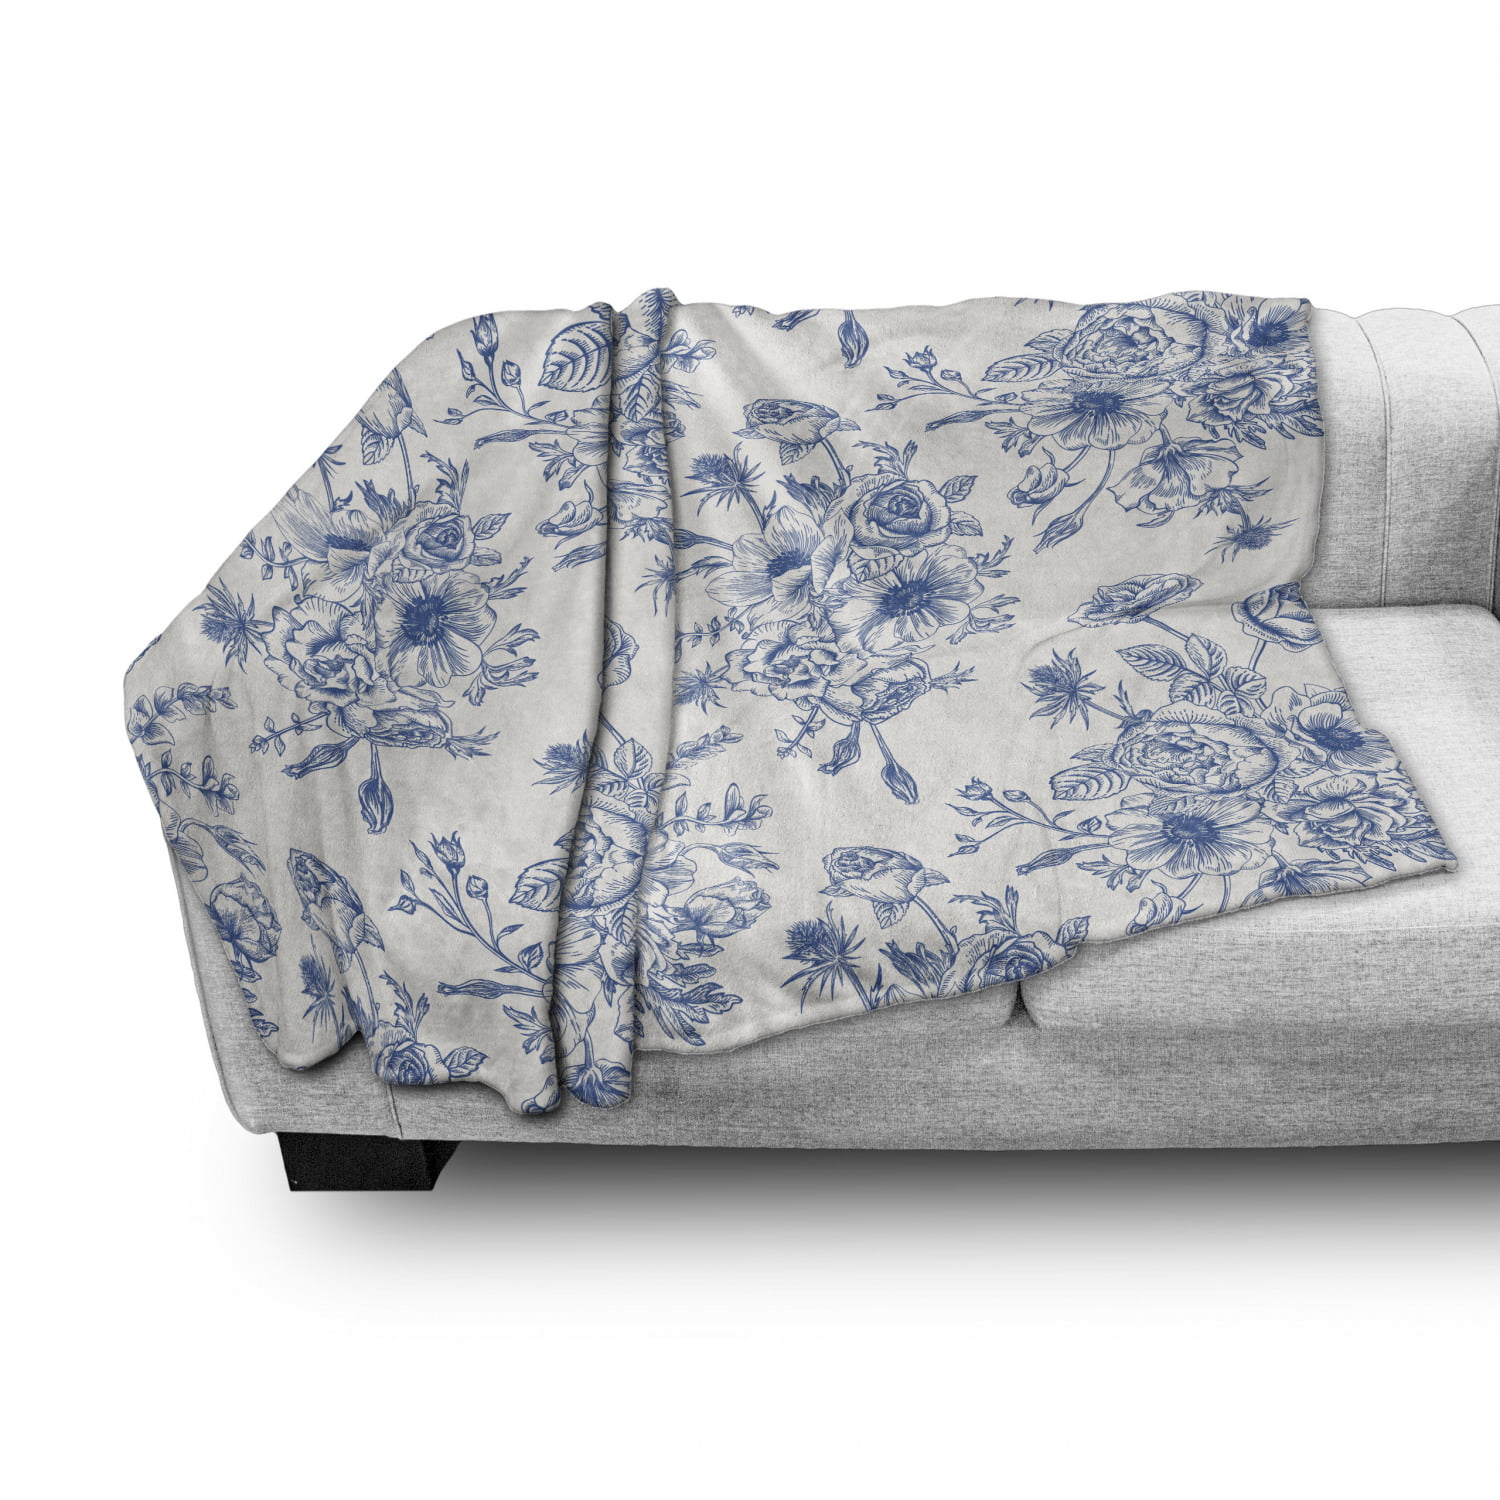 Anemone Flower Soft Flannel Fleece Blanket, Floral Pattern with